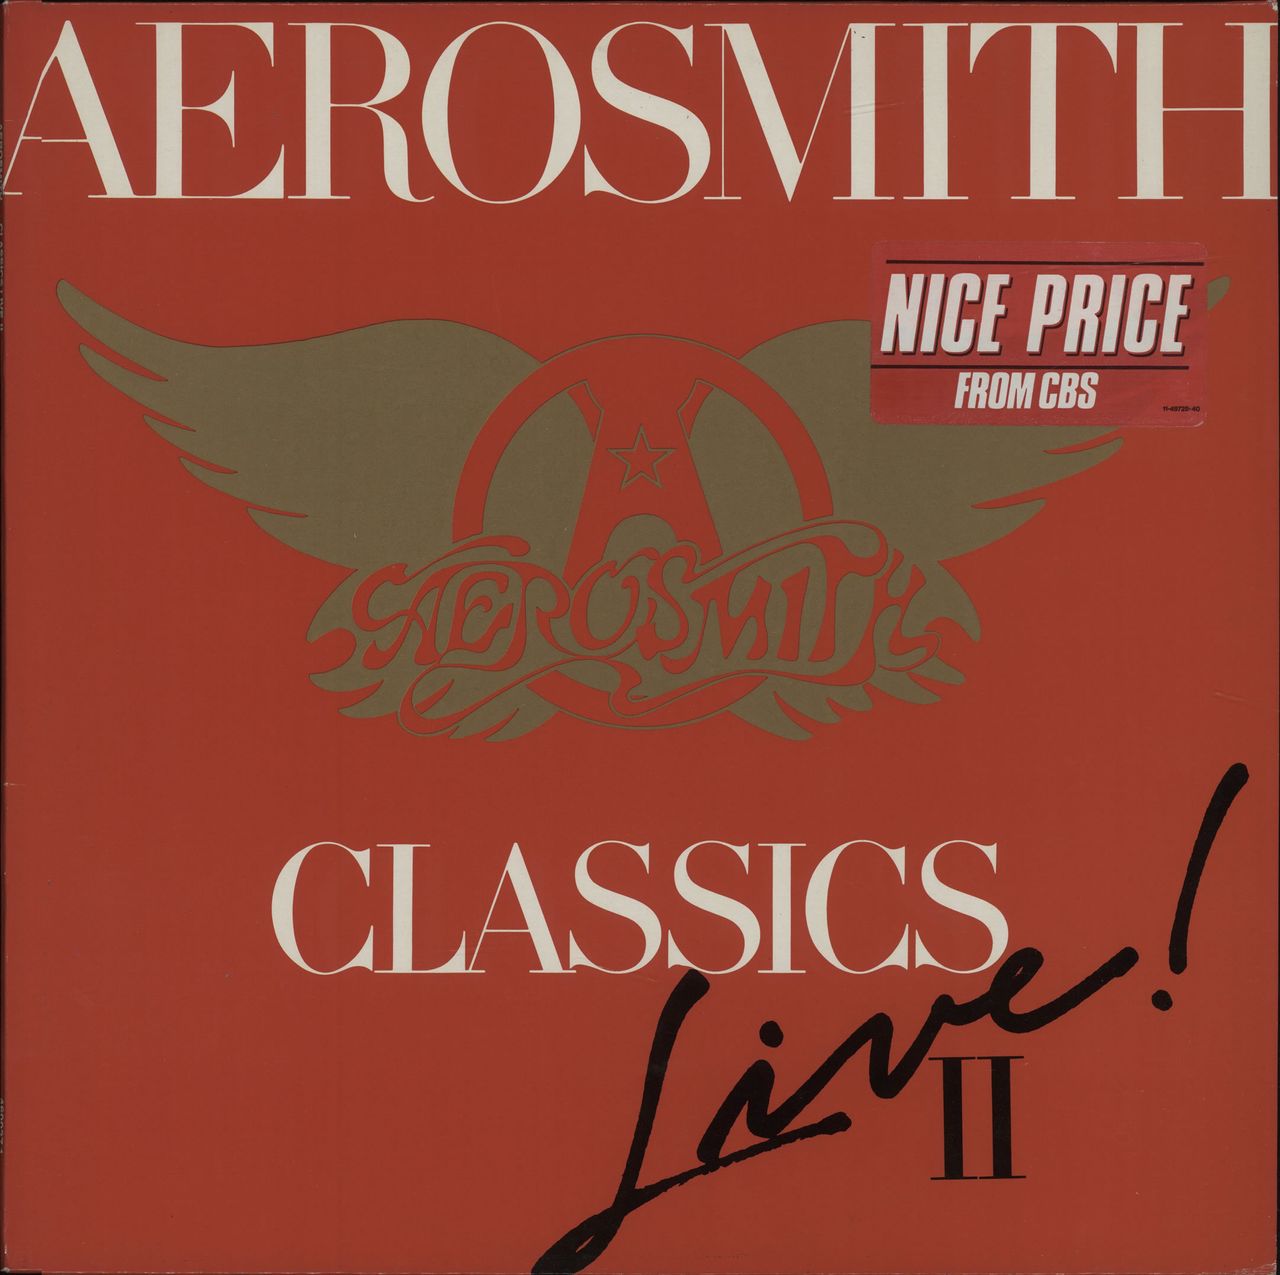 Aerosmith Live! Dutch Vinyl LP RareVinyl.com